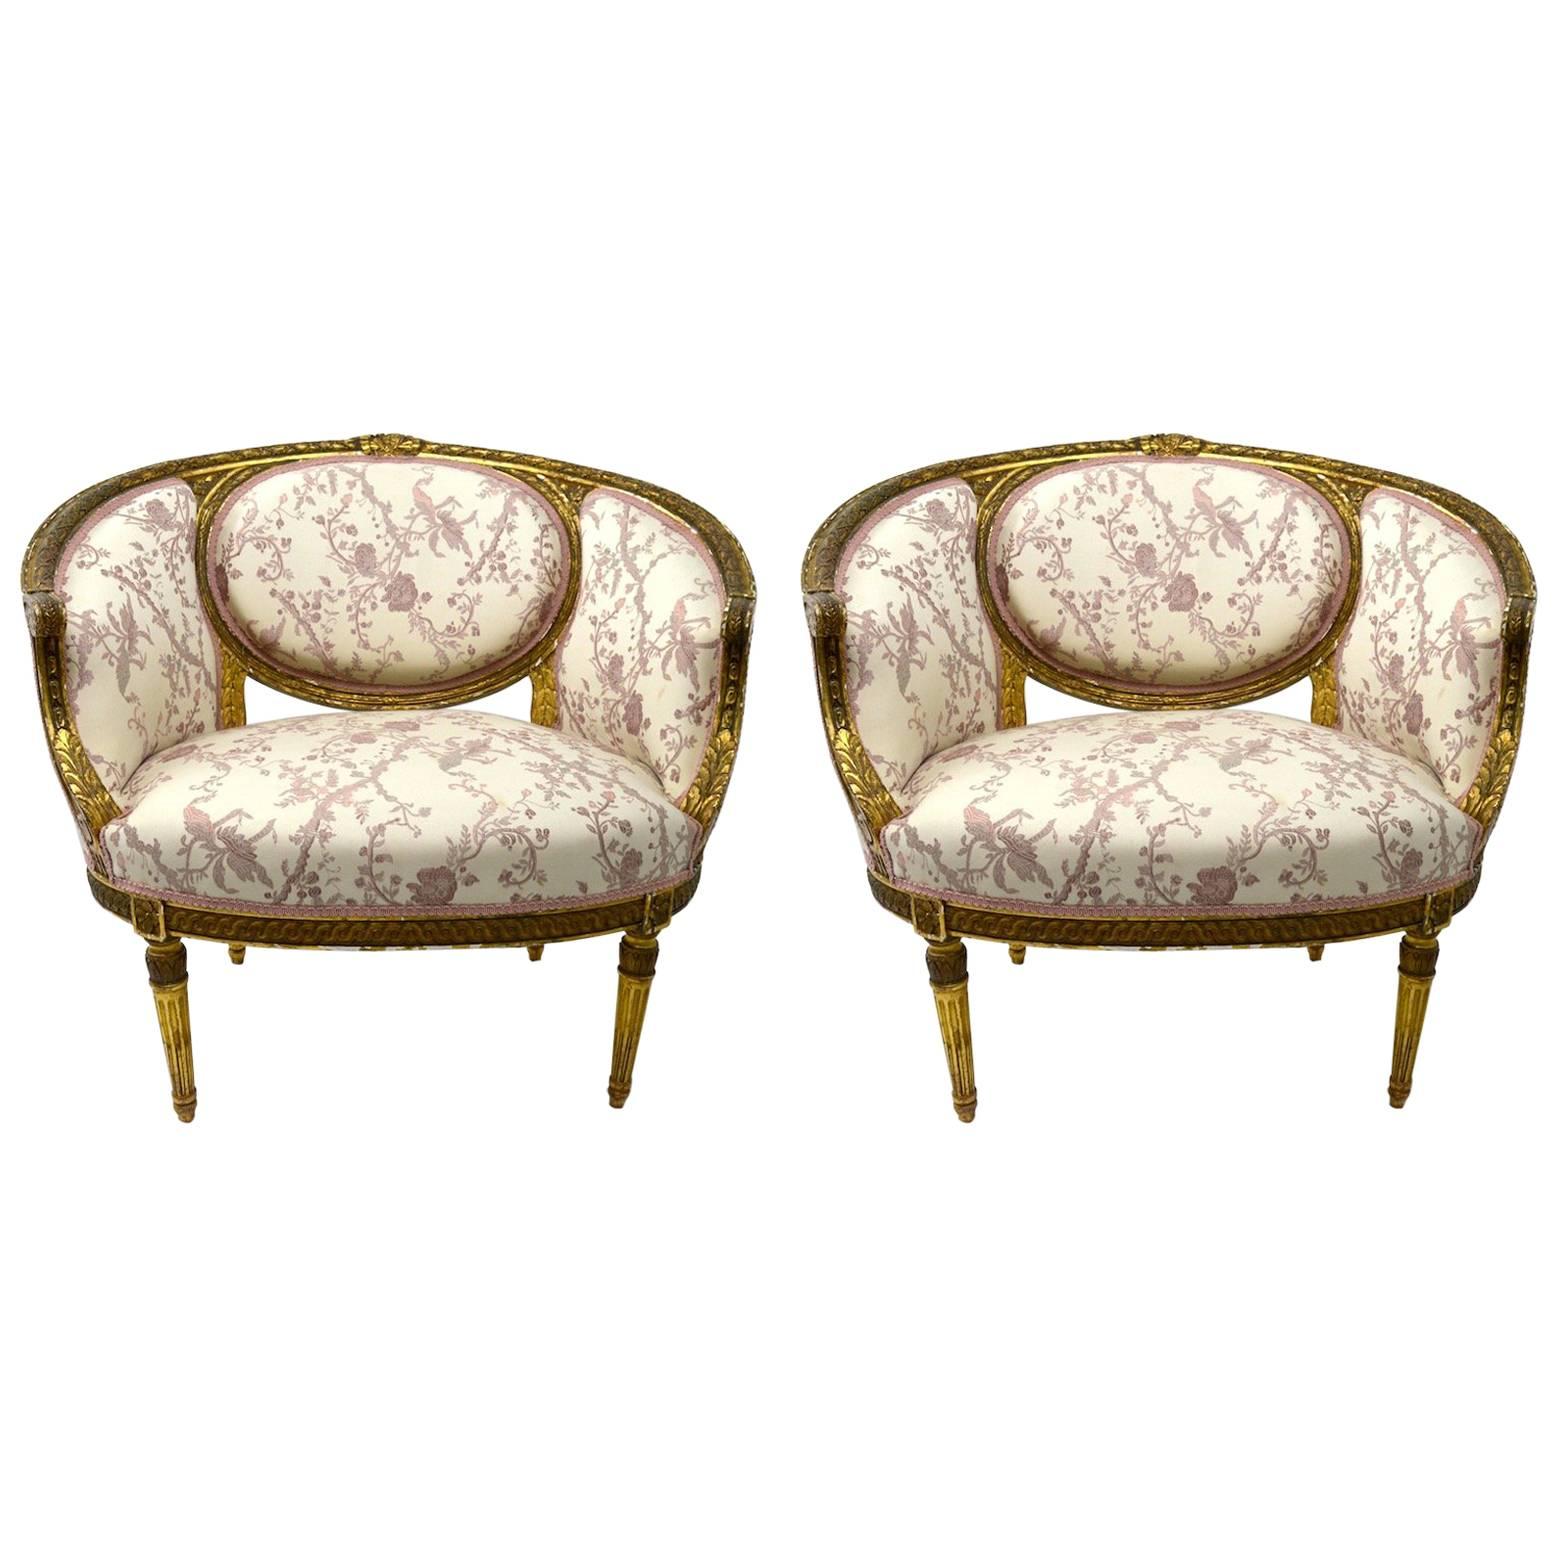 Pair of Gilt Salon Chairs